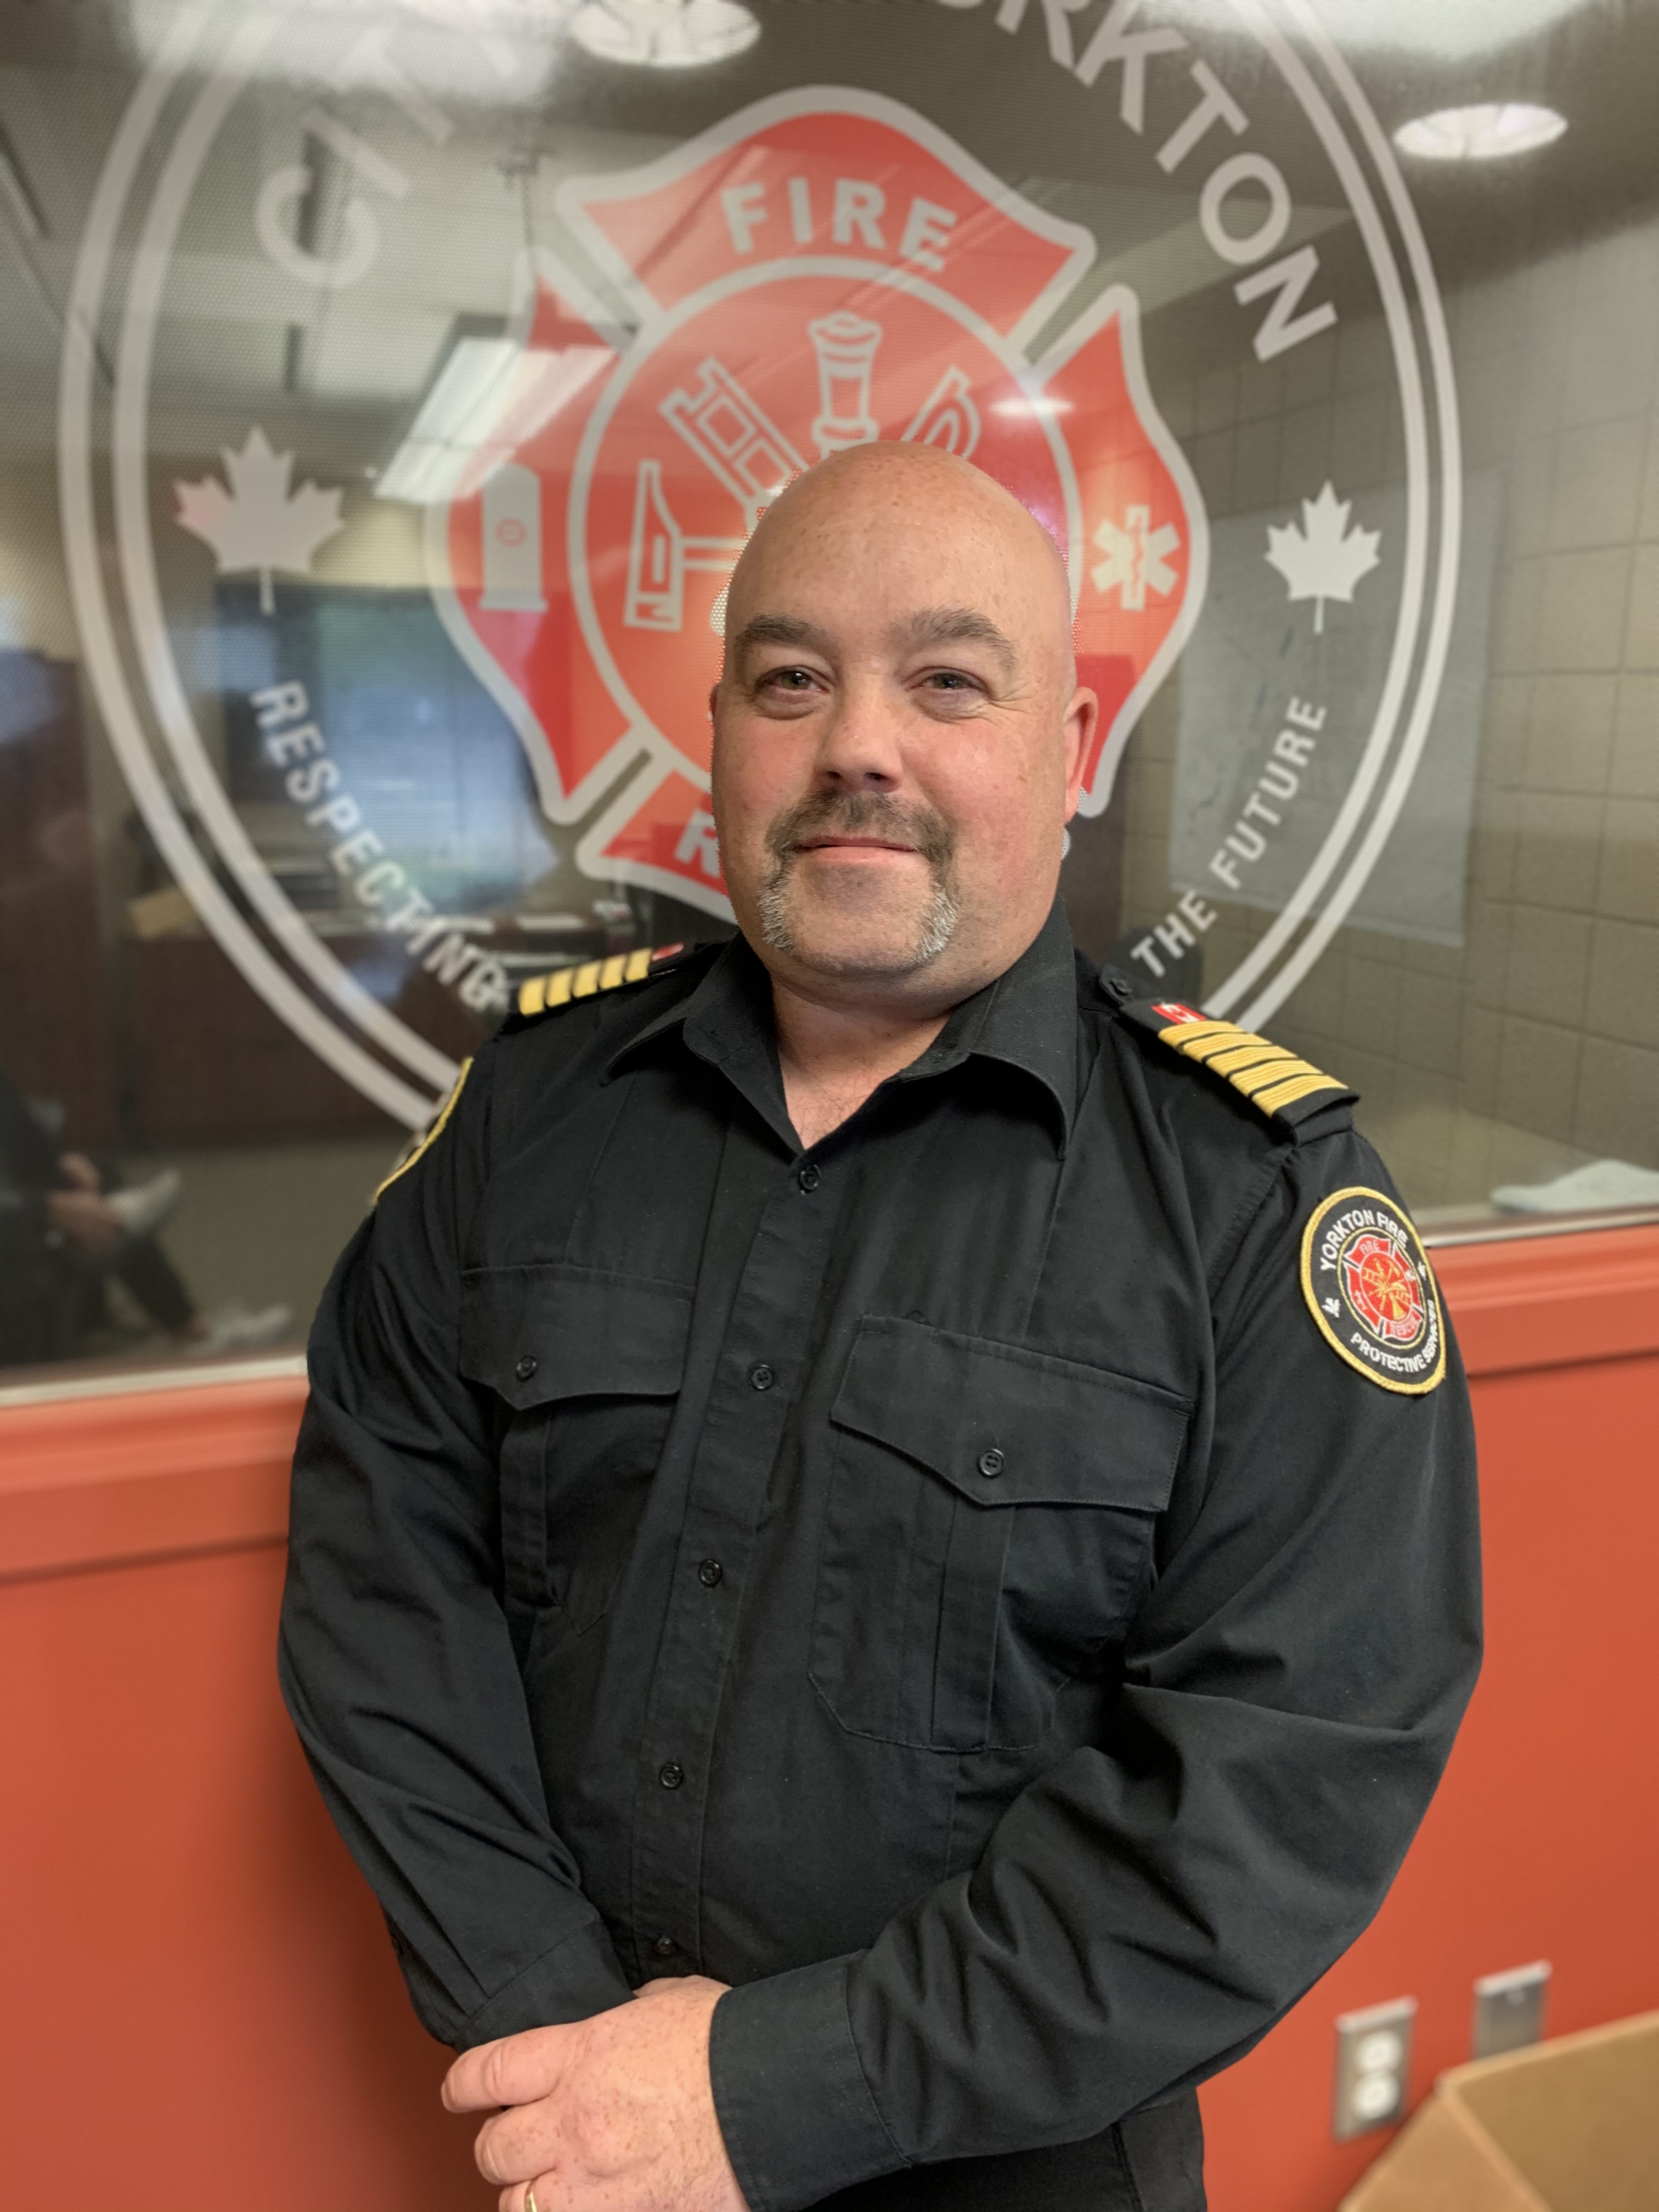 Fire chief photo